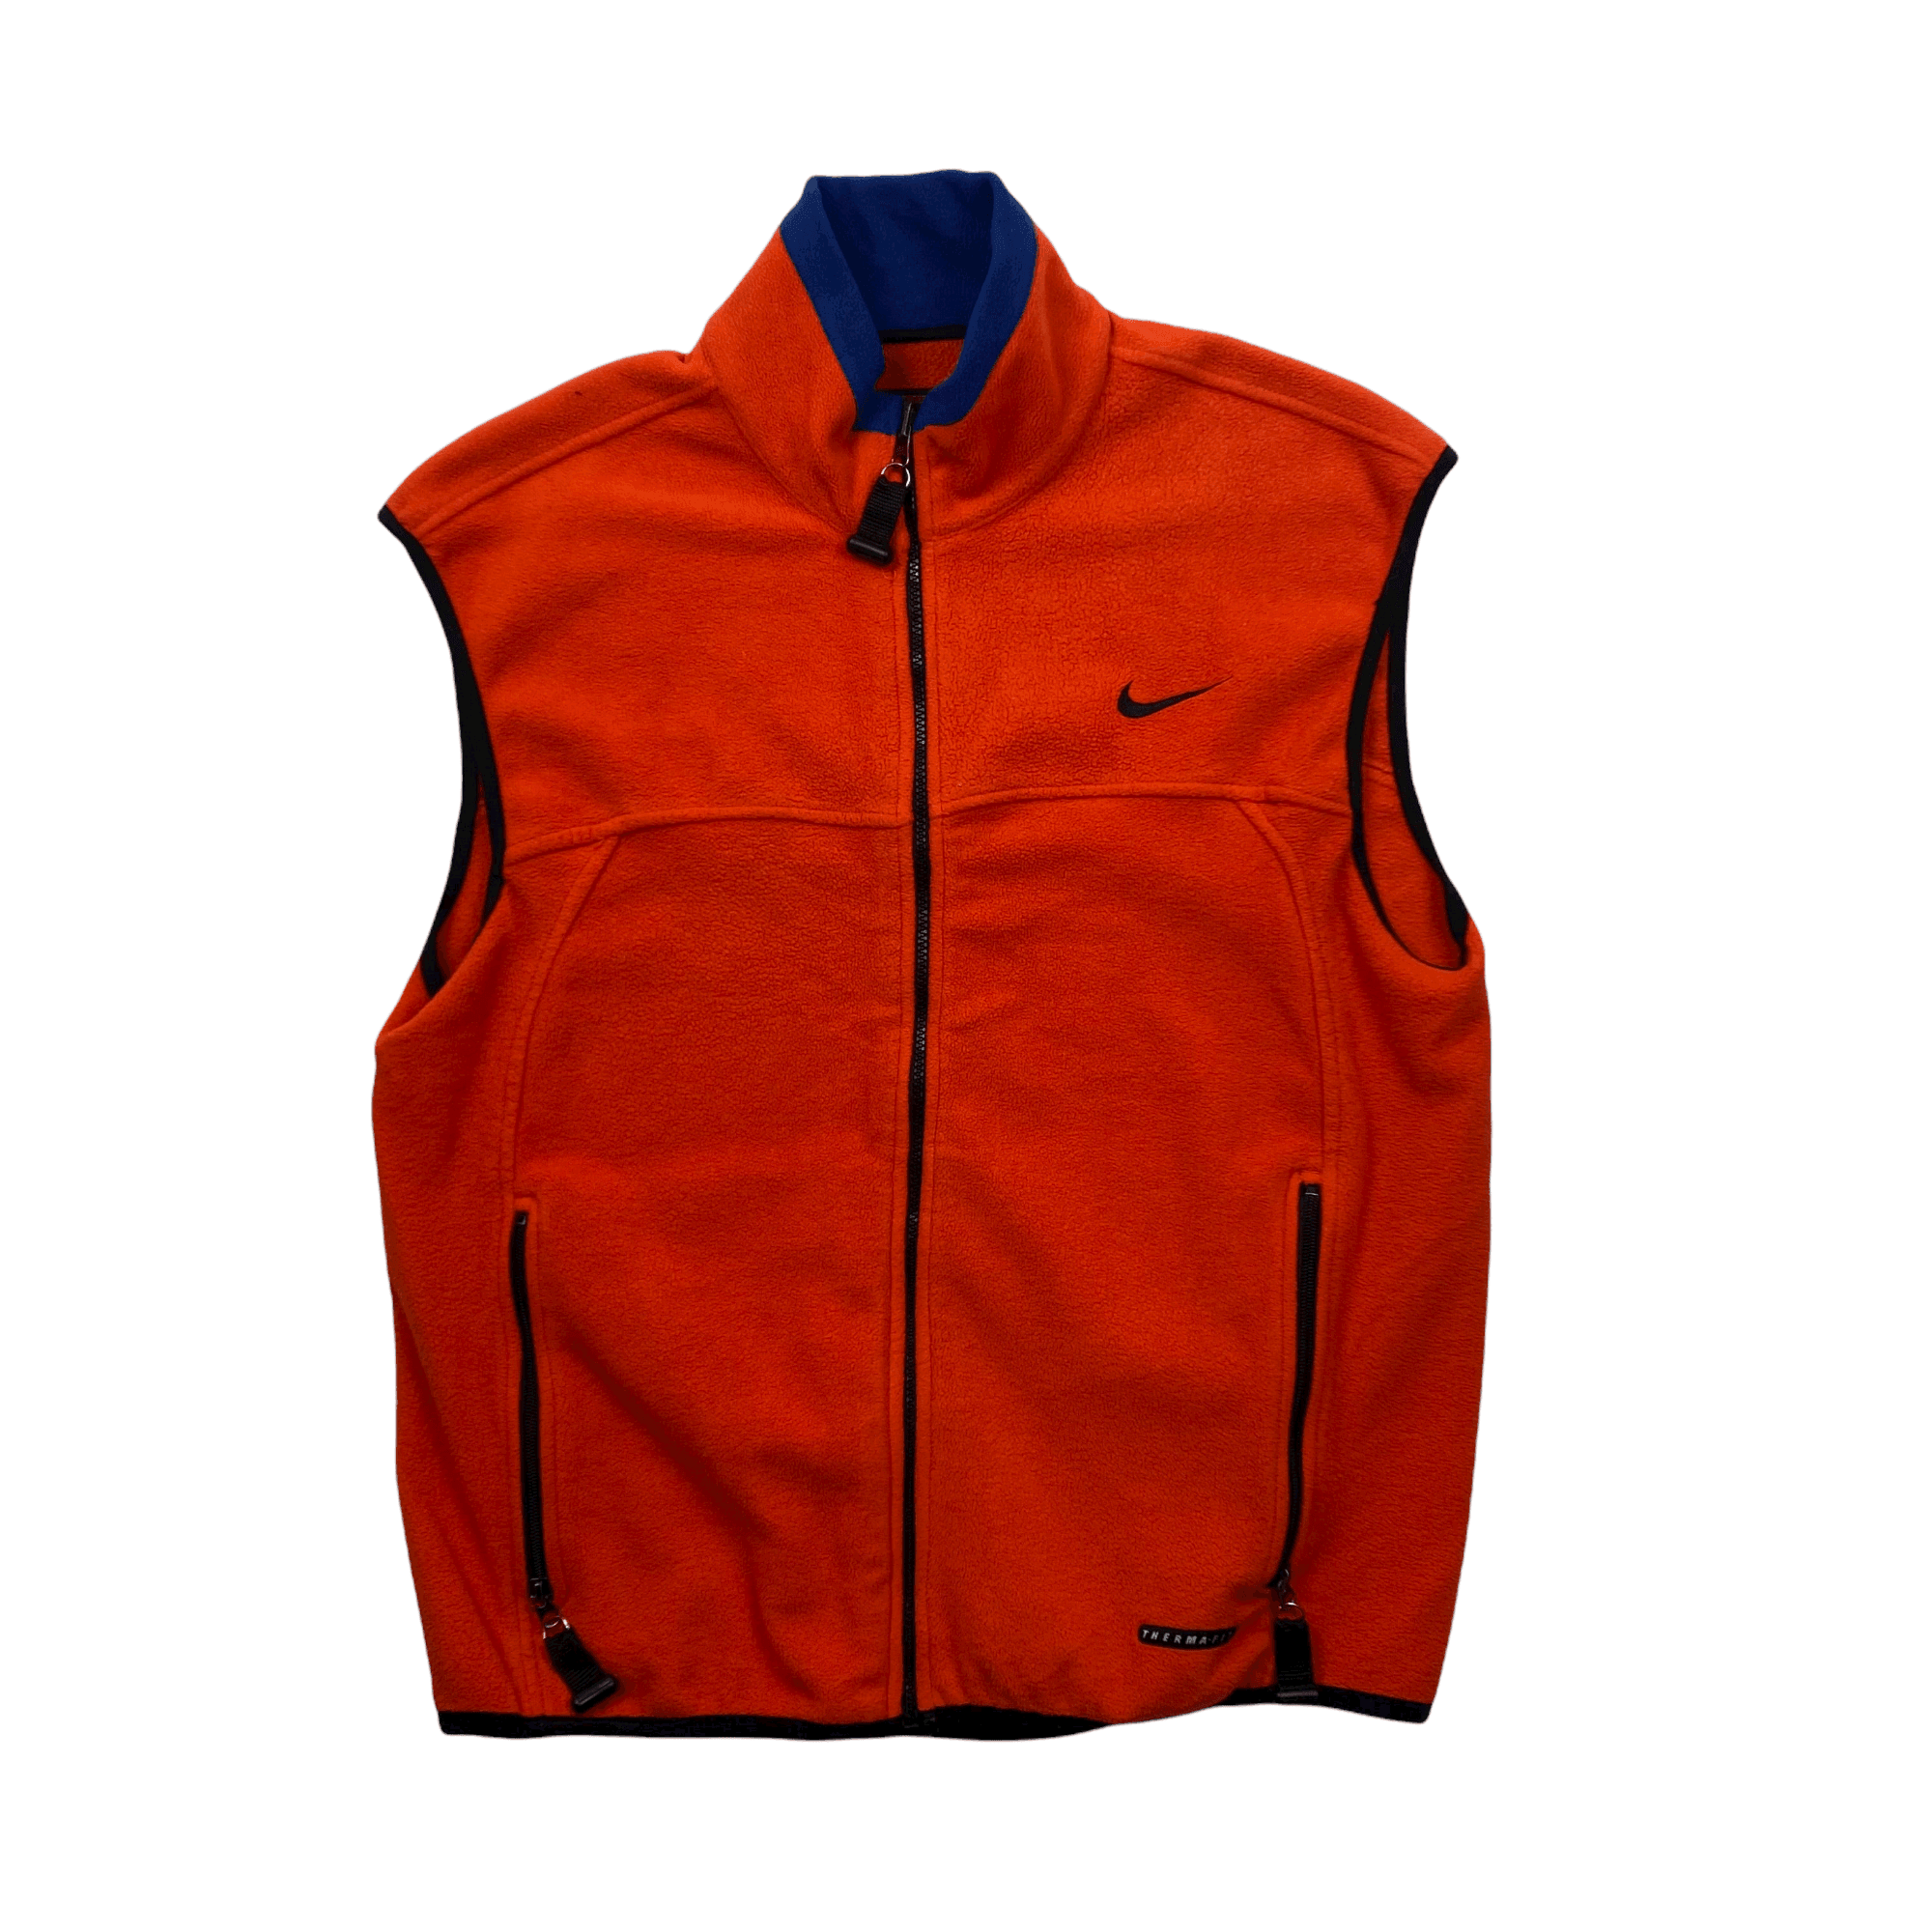 Vintage 90s Orange Nike ACG Spell-Out Fleece Gilet - Large - The Streetwear Studio